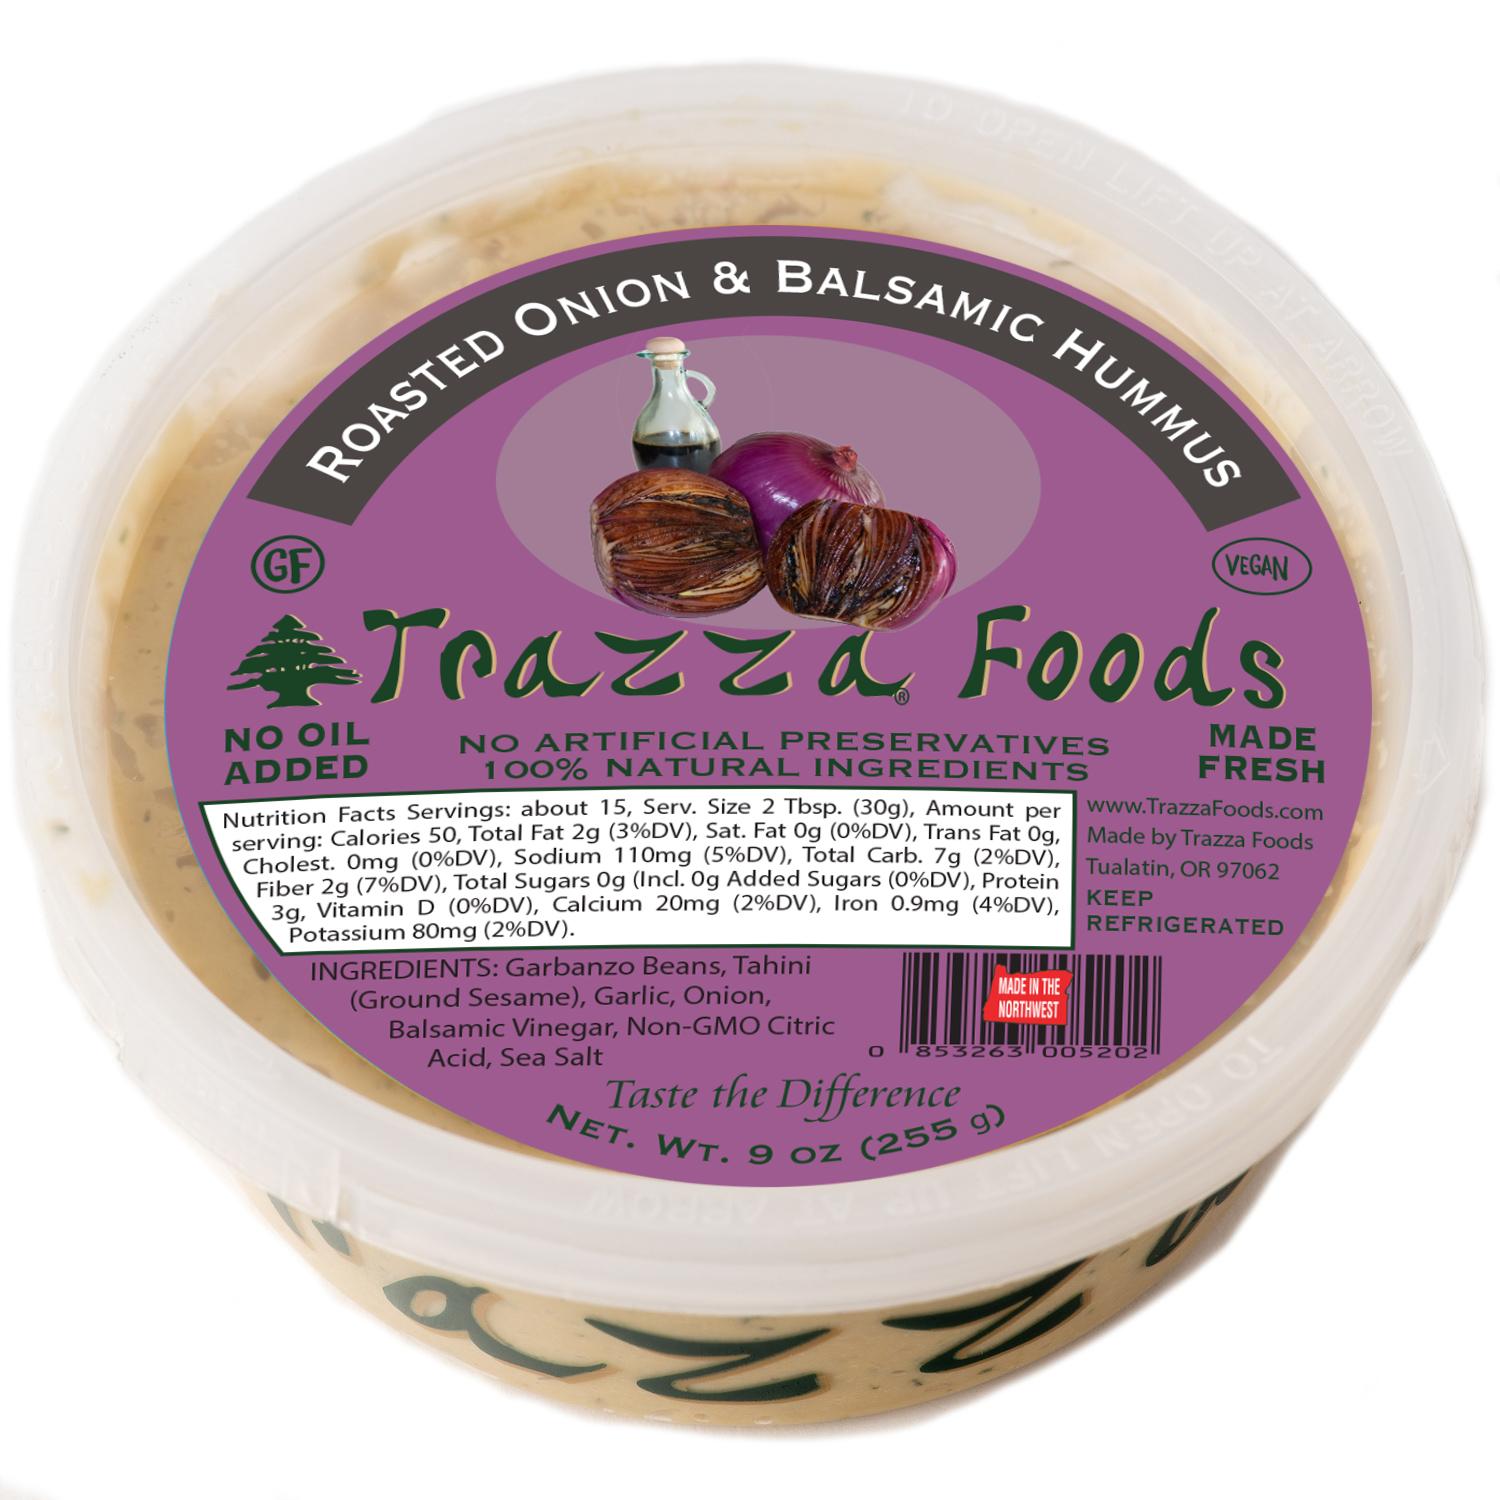 Roasted Onion & Balsamic Hummus